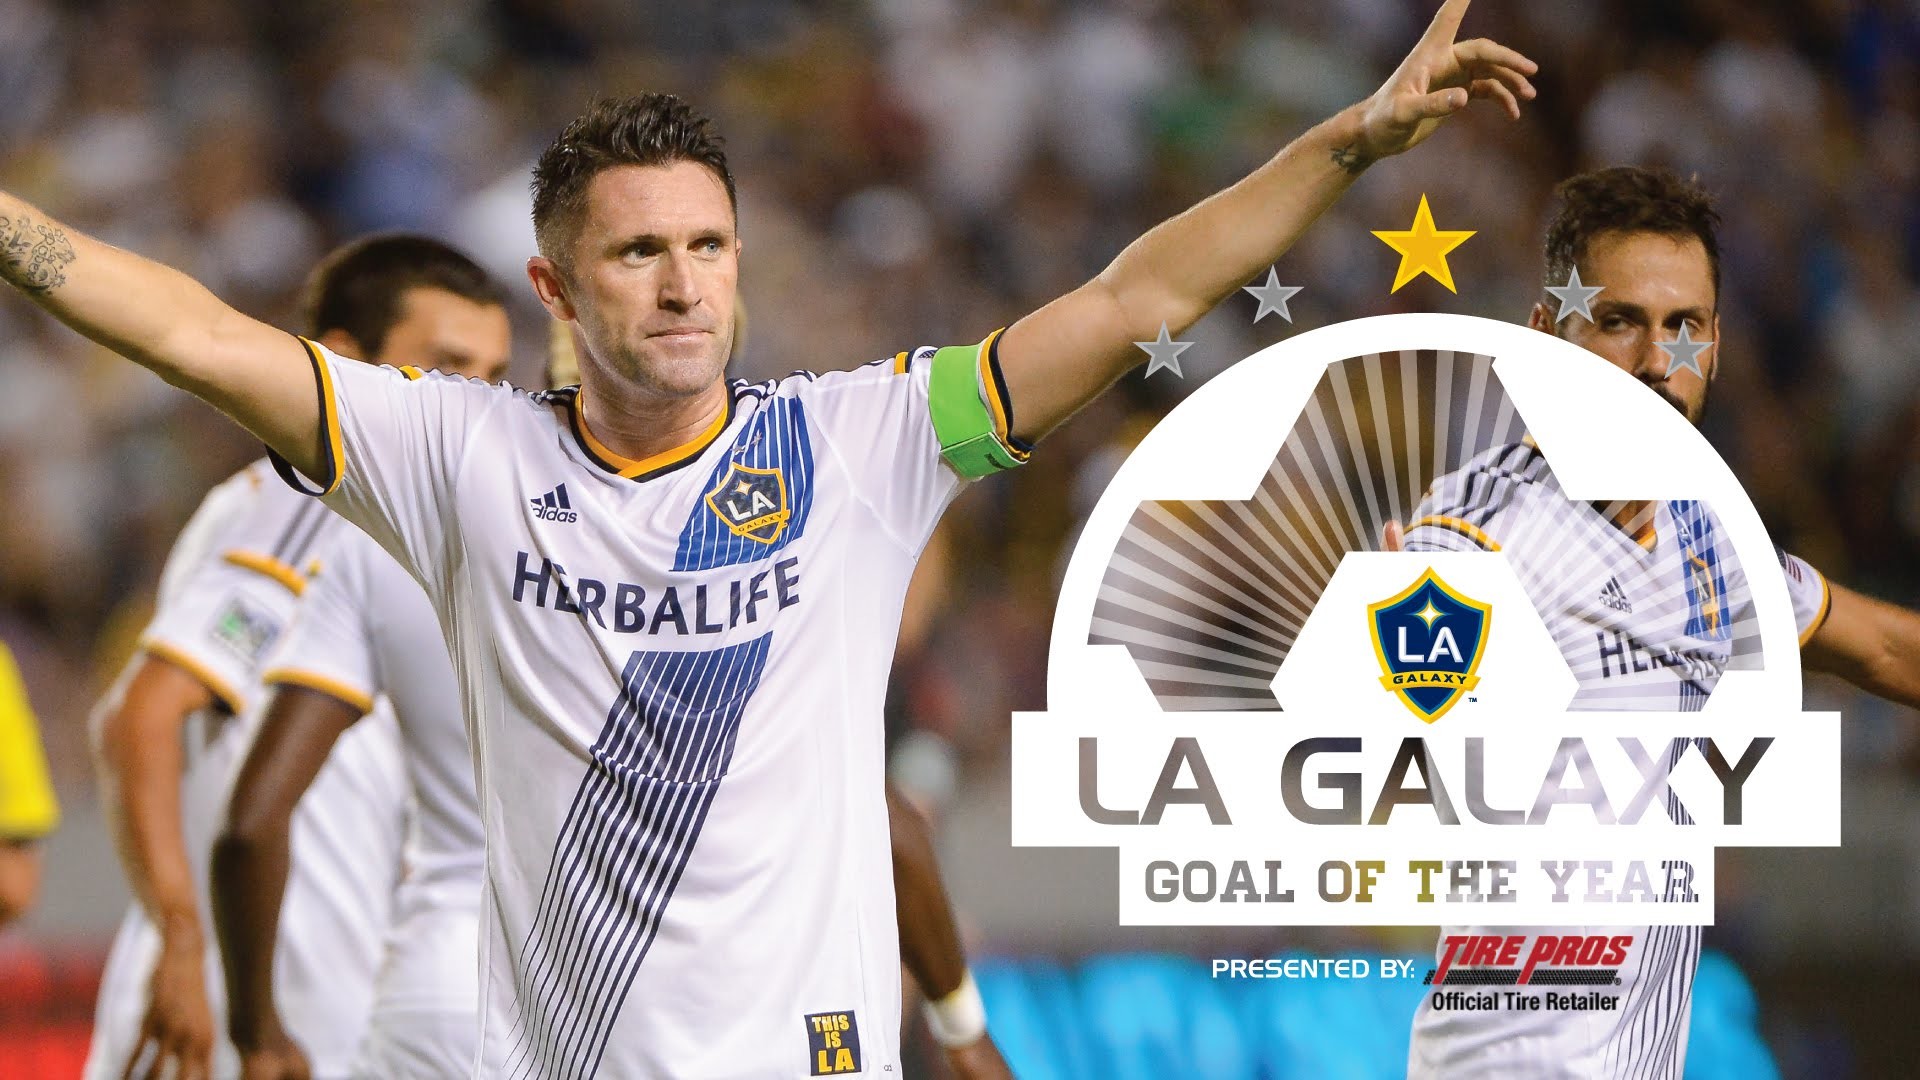 1920x1080 2014 LA Galaxy Goal of the Year: Robbie Keane vs NE Revolution (July 16)